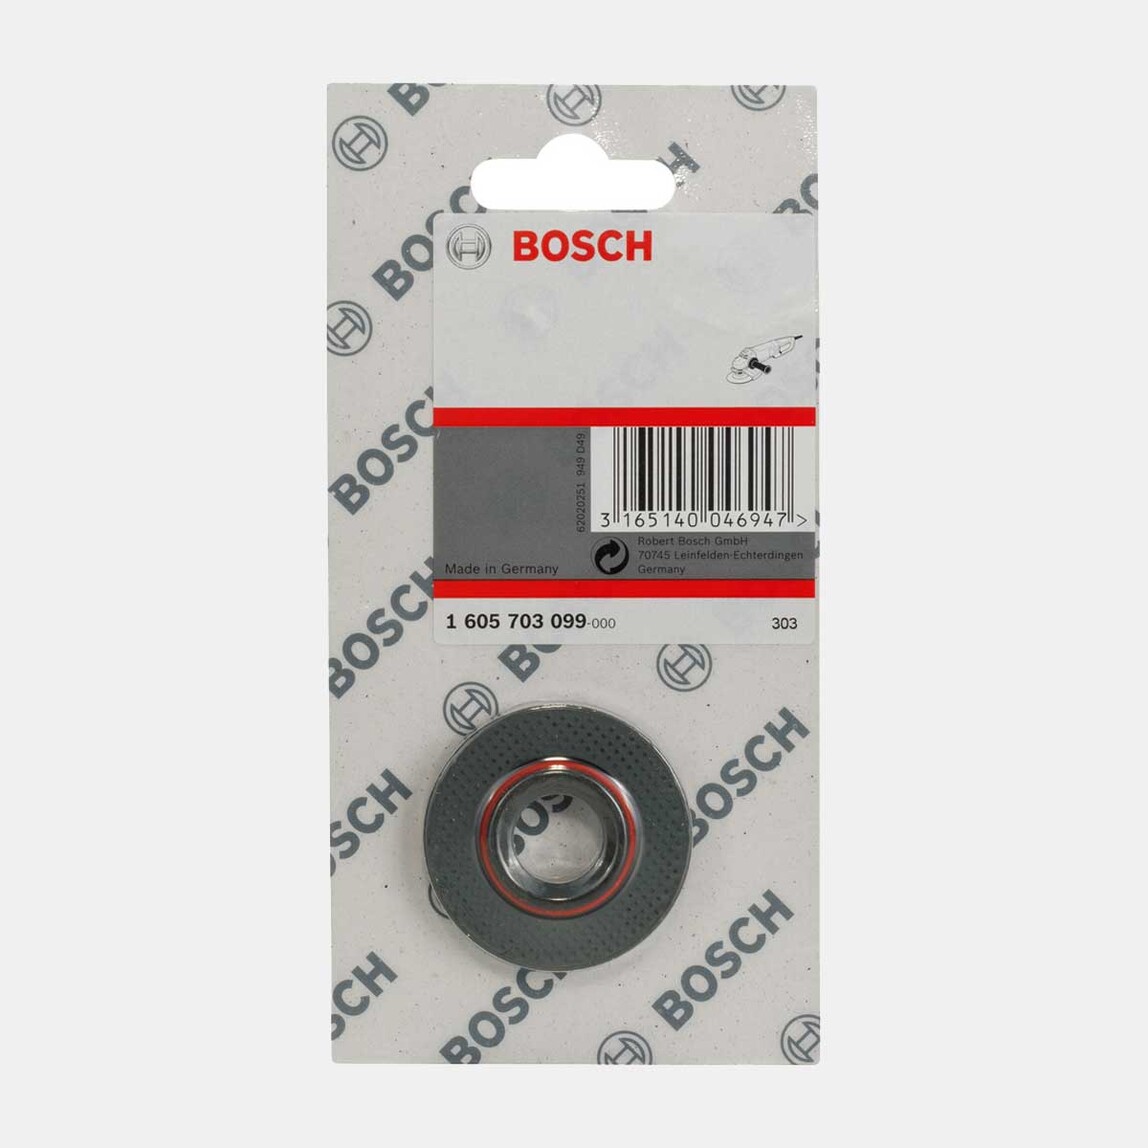    Bosch Bağlantı Flanşı M14 İçin  